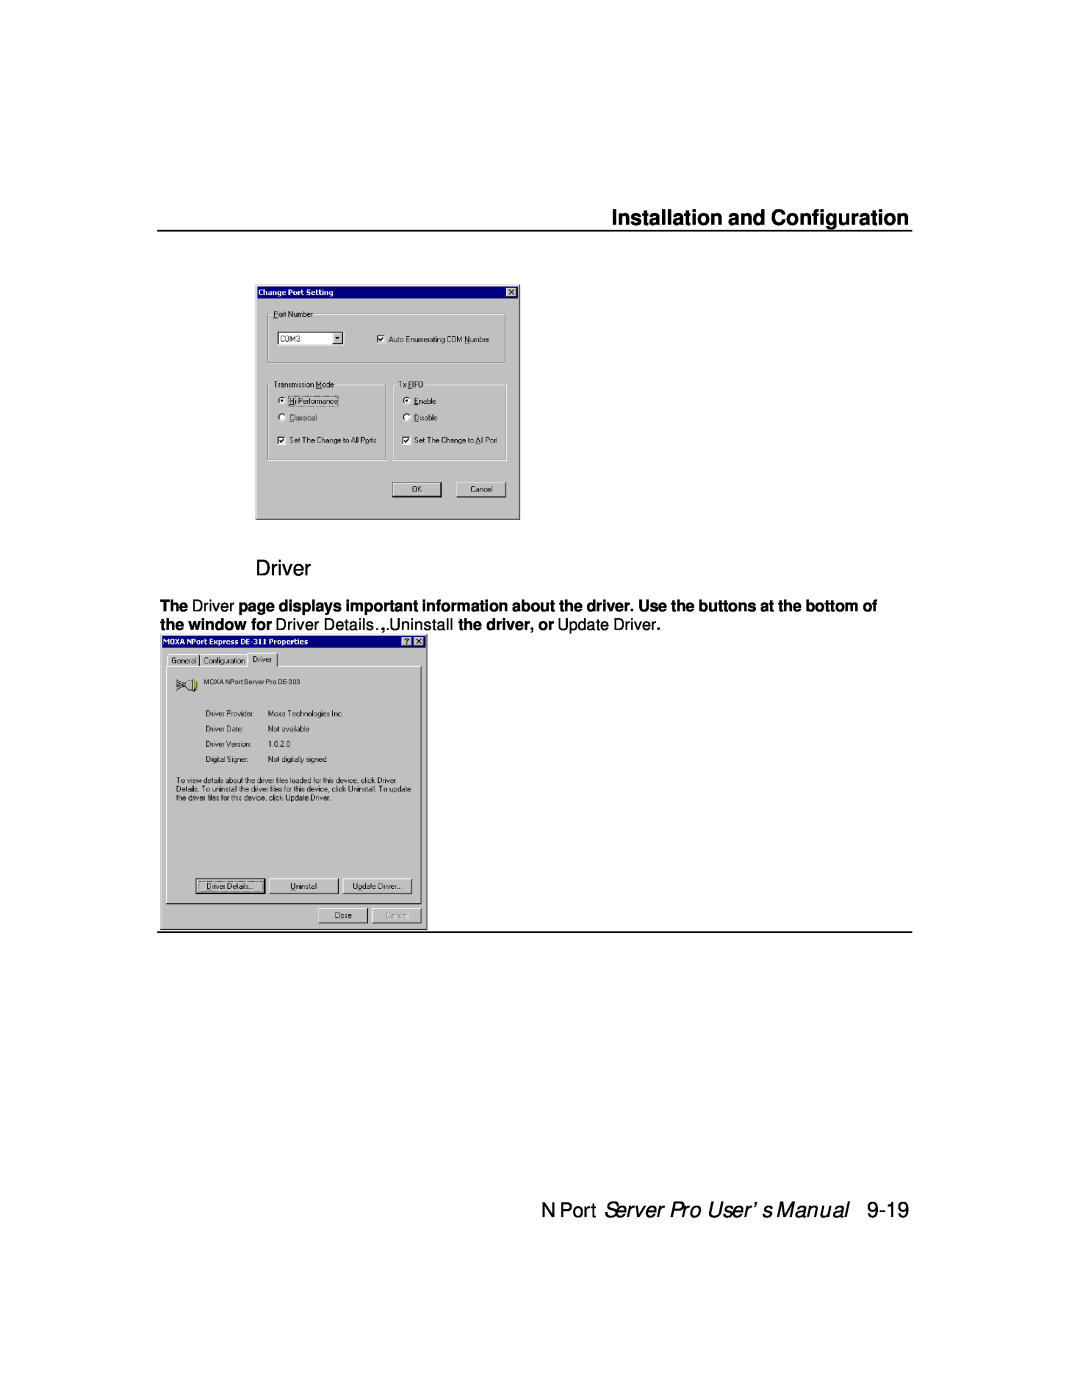 Moxa Technologies DE-308, DE-303 manual Driver, Installation and Configuration, NPort Server Pro User’s Manual 